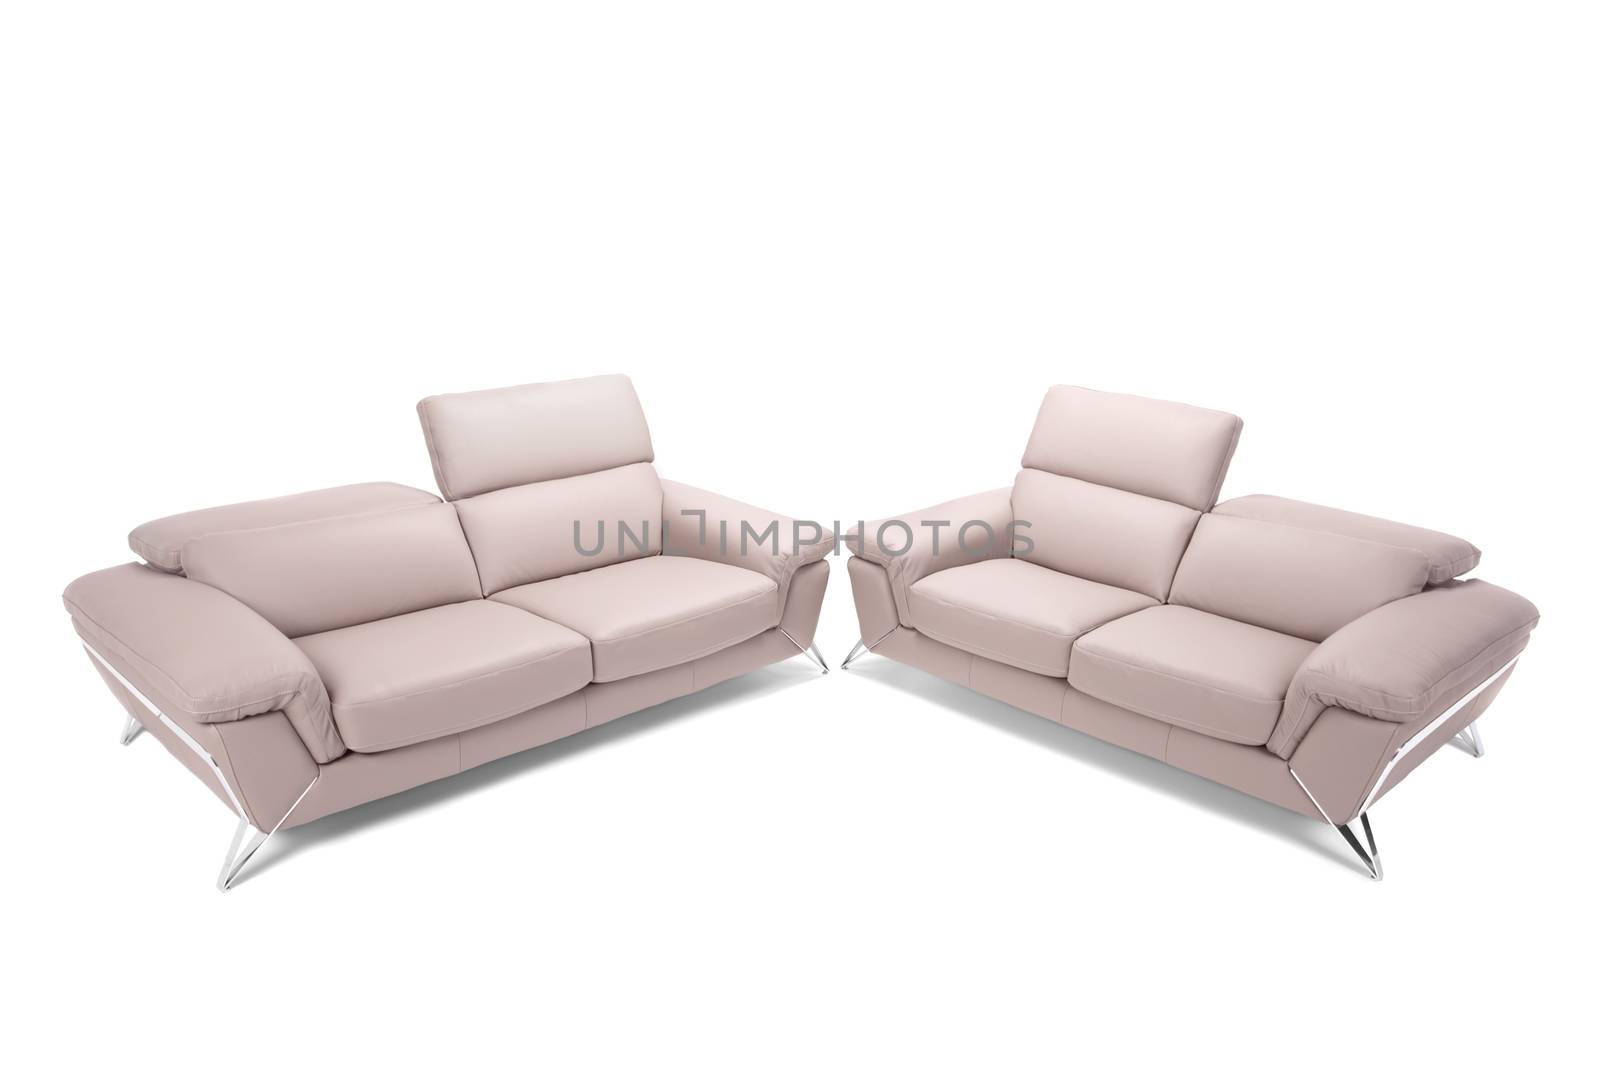 modern leather sofa isolated on white background